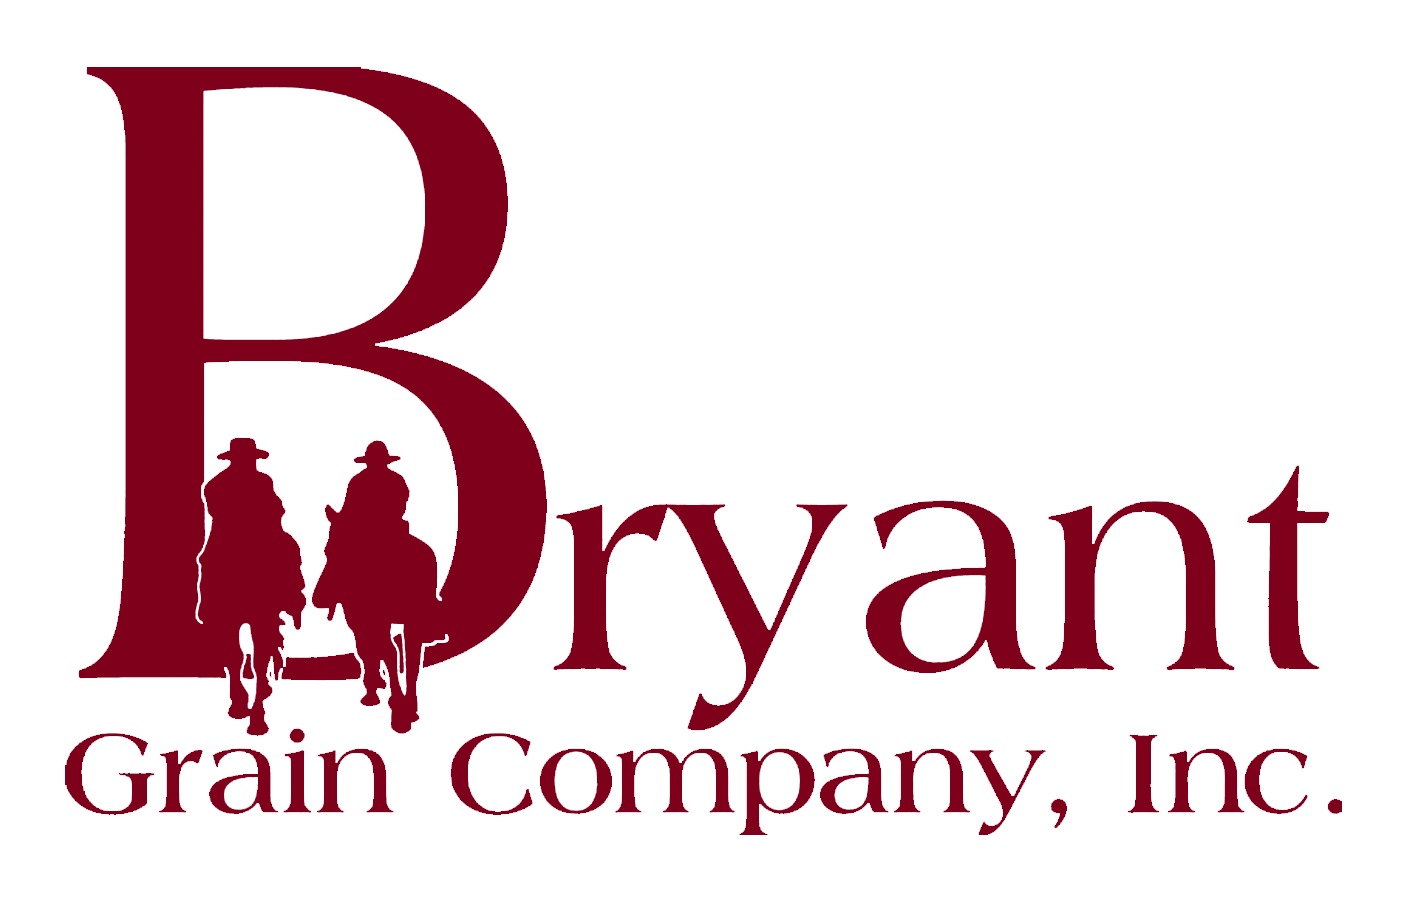 Bryant Grain cattle feed